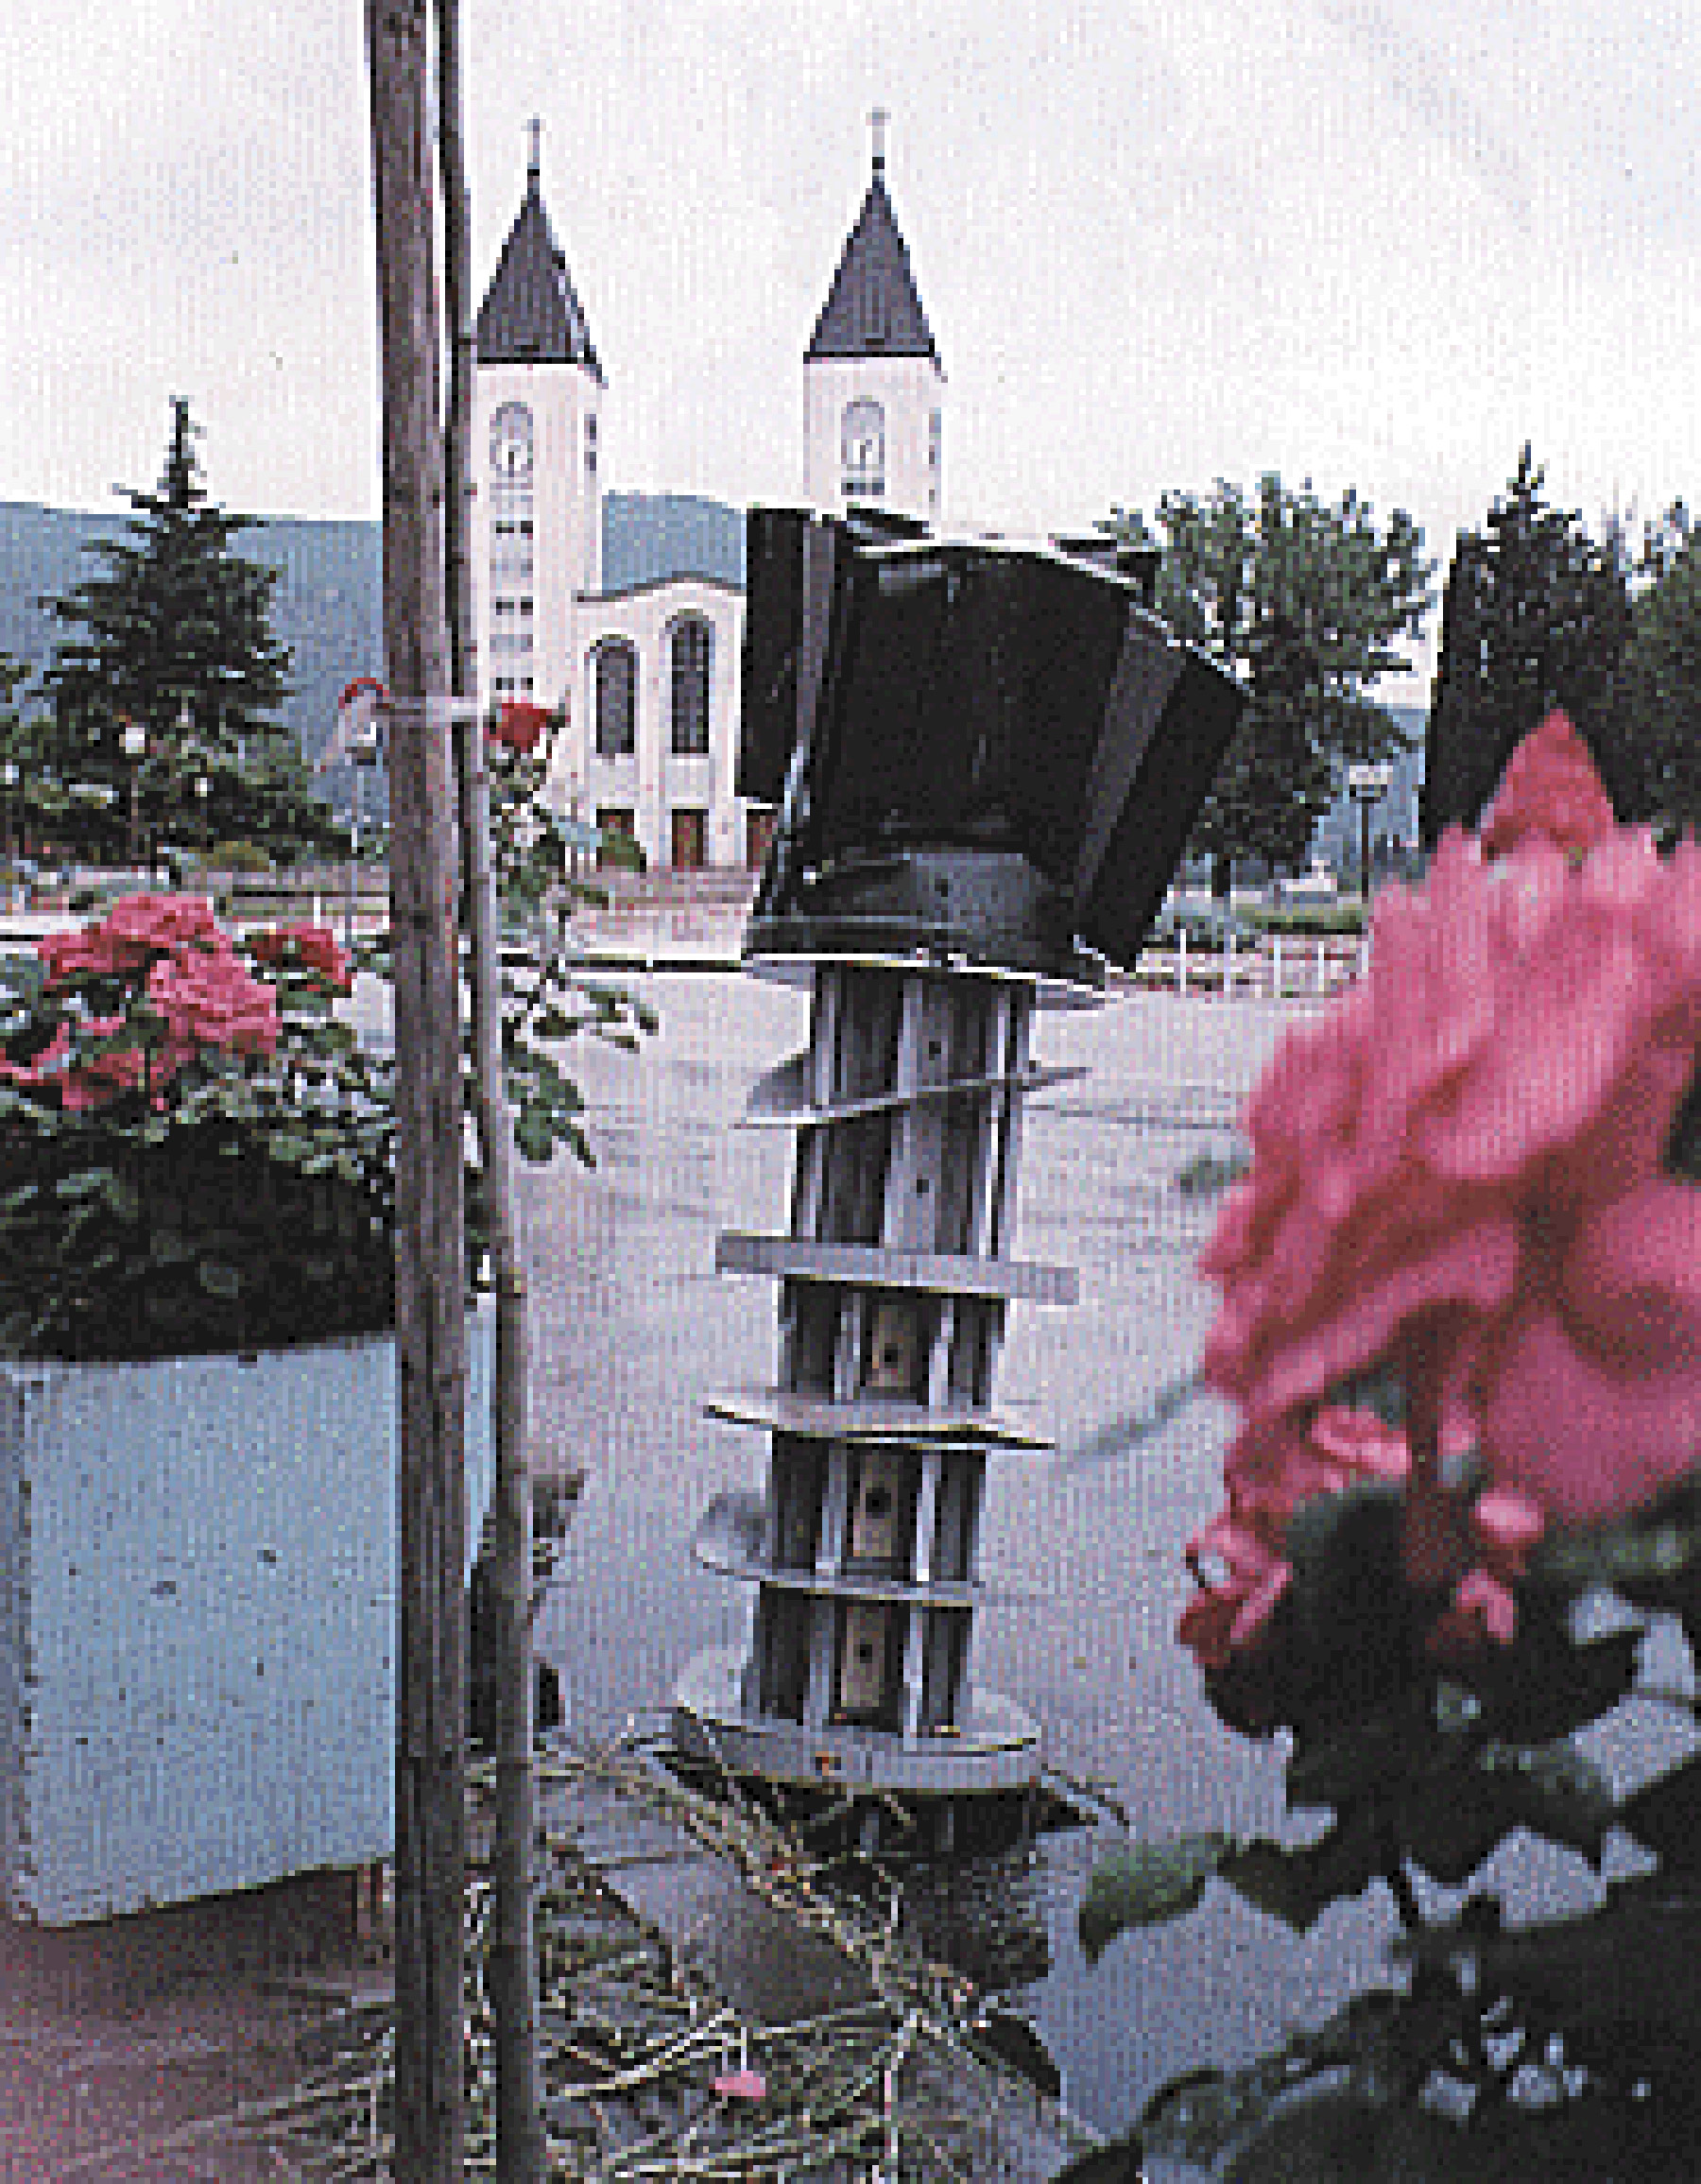 Unexploded bomb in Medjugorje